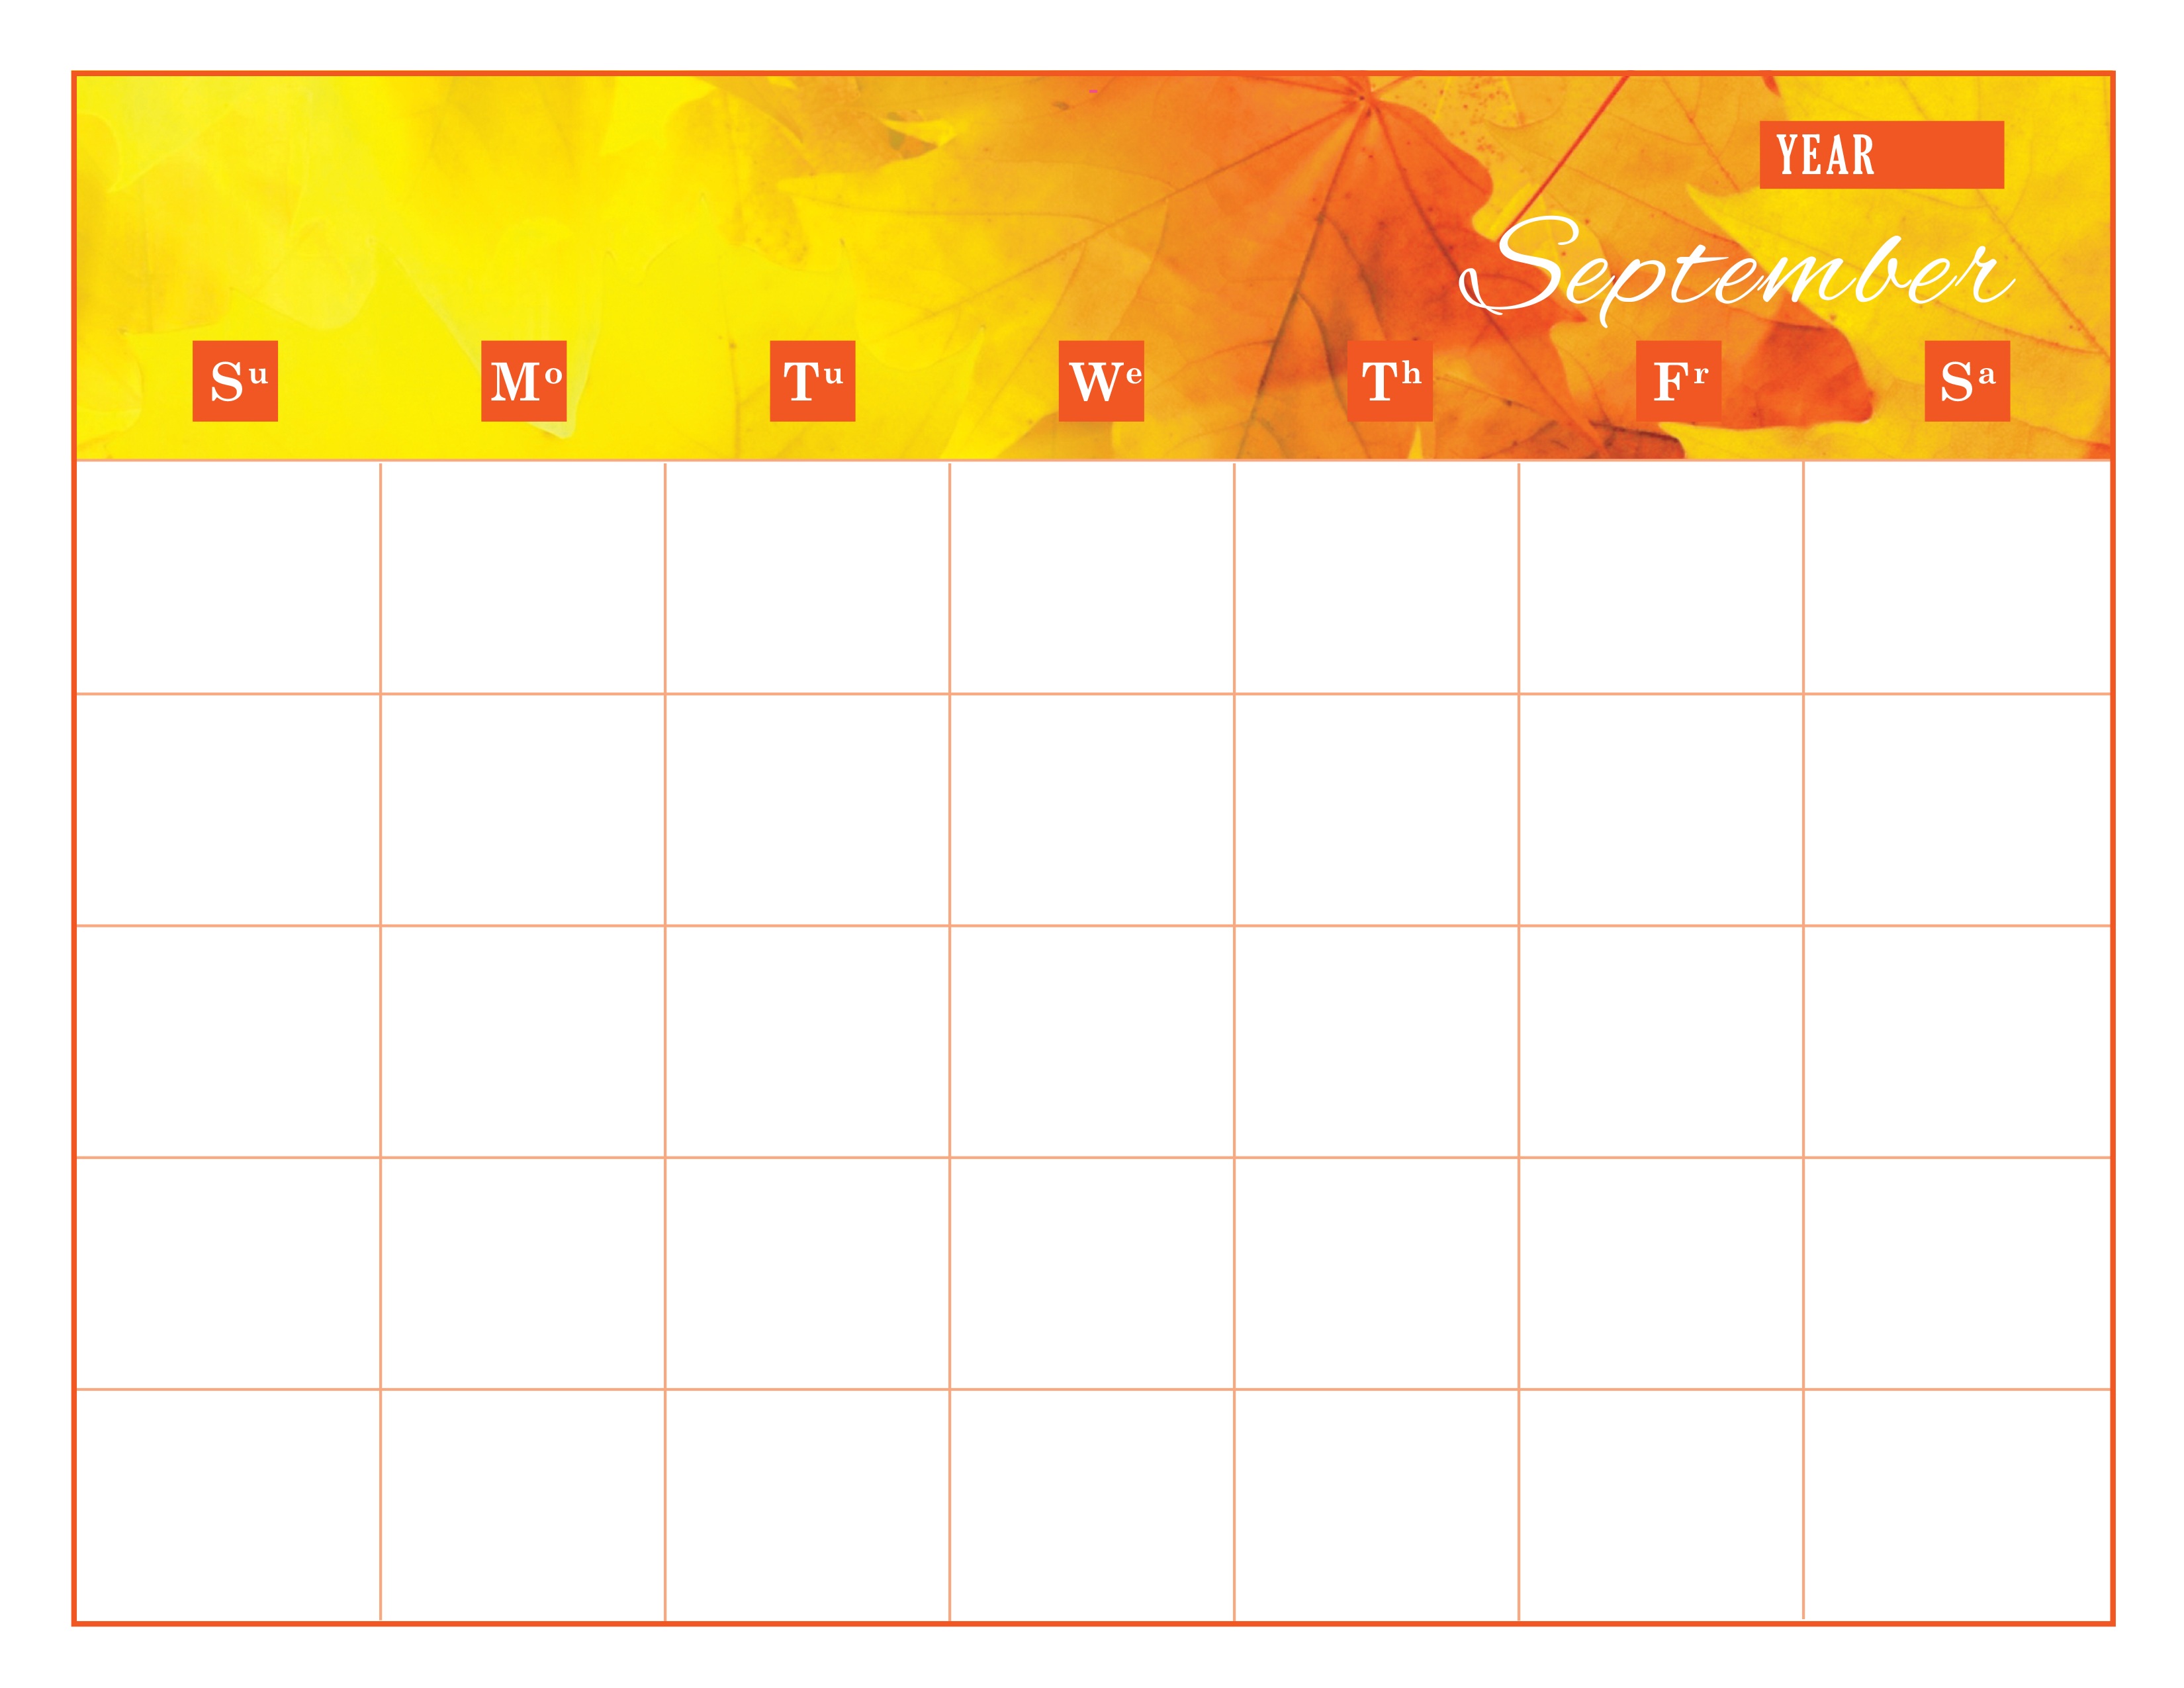 Calendar template september free image download